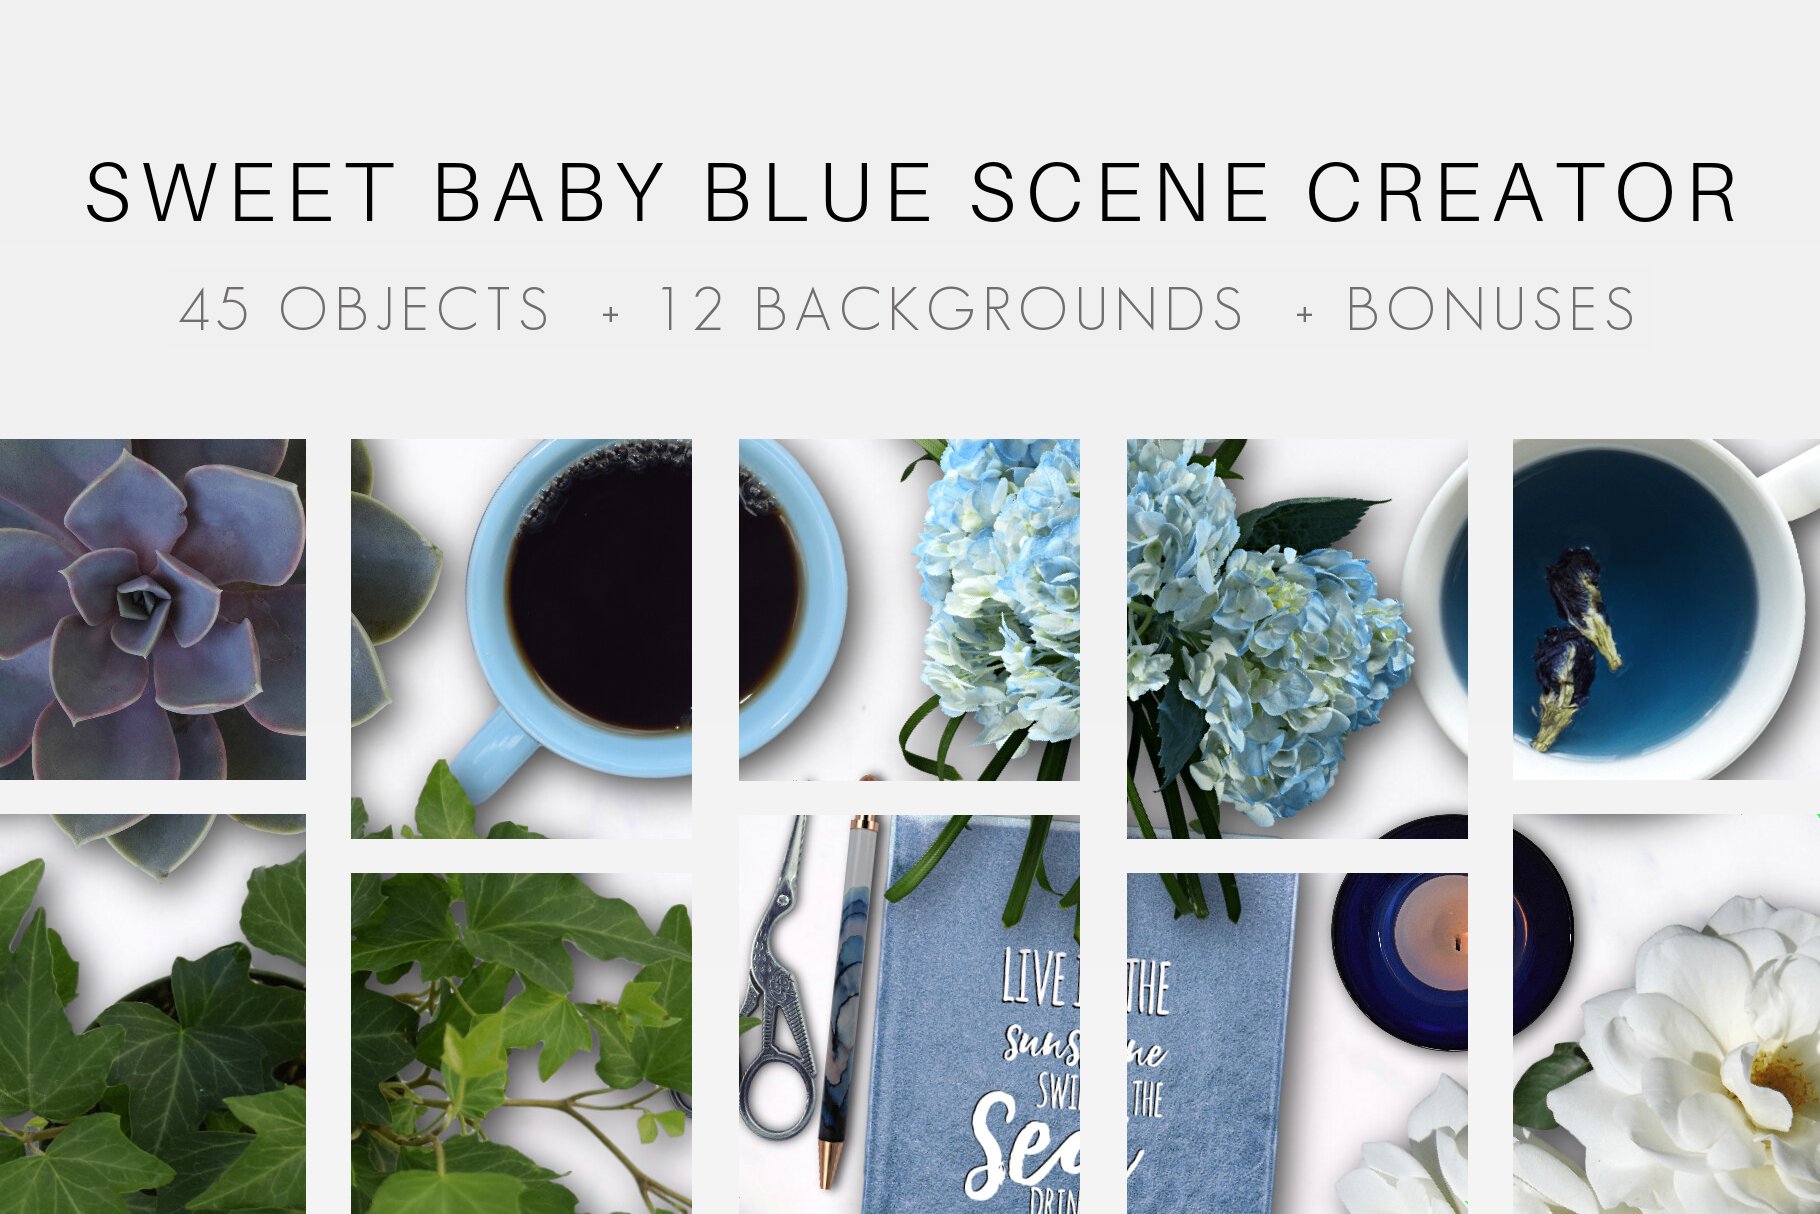 Sweet Baby Blue Desk Scene Creator cover image.